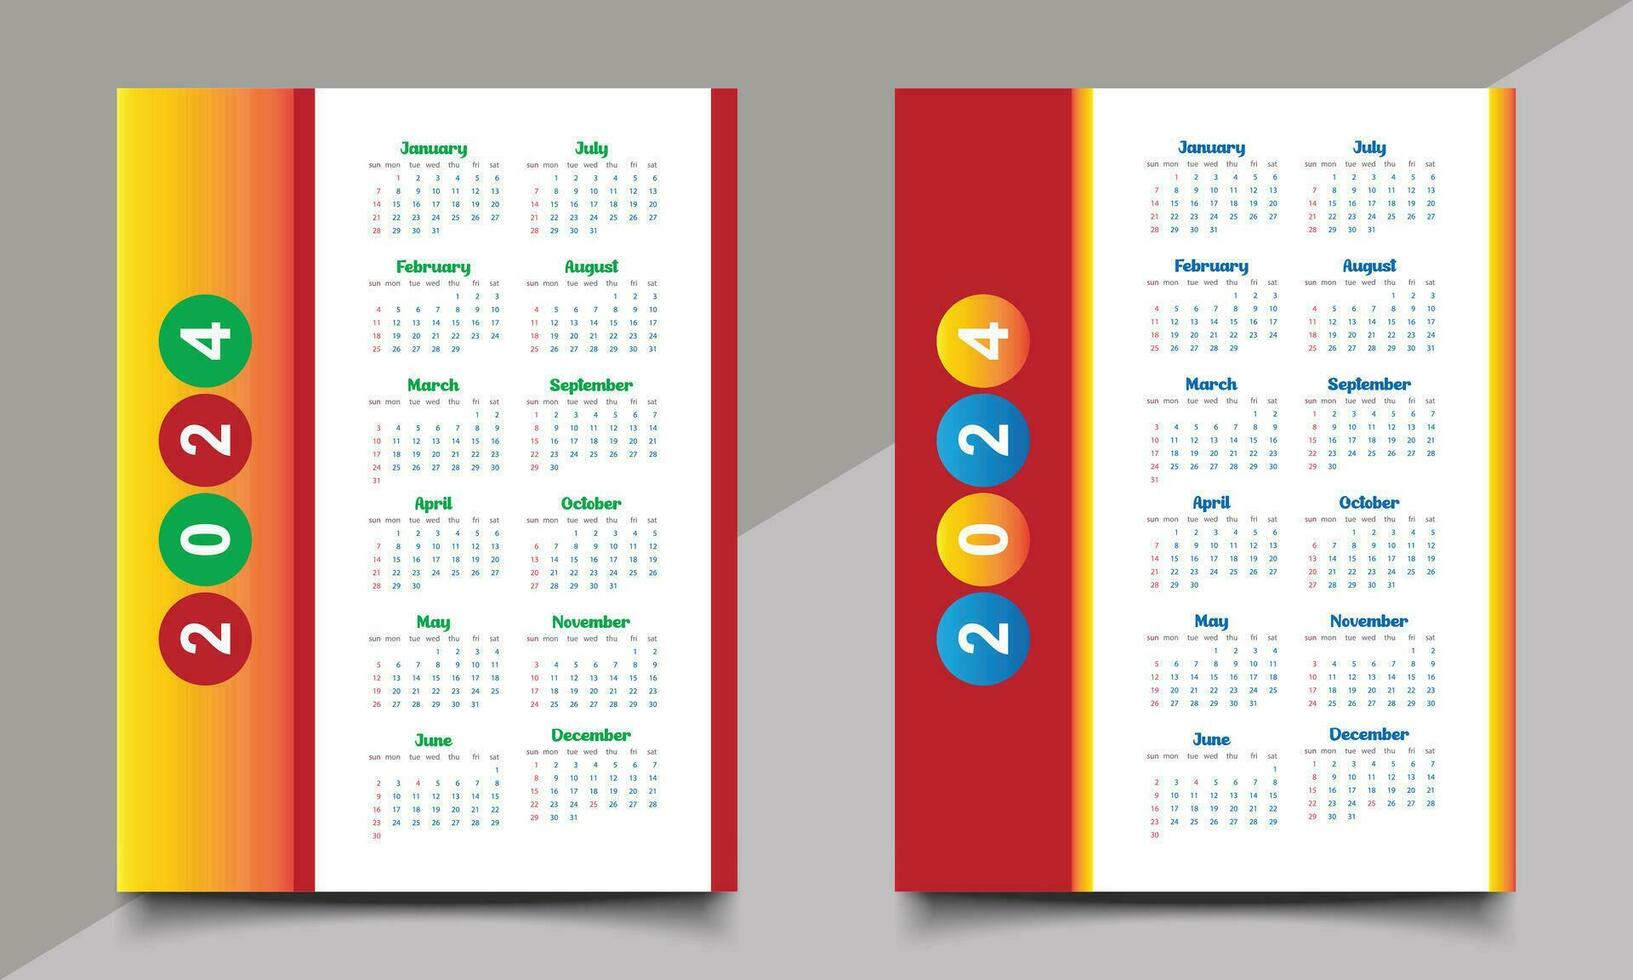 Calendar Design Template. One page or wall calendar design. vector